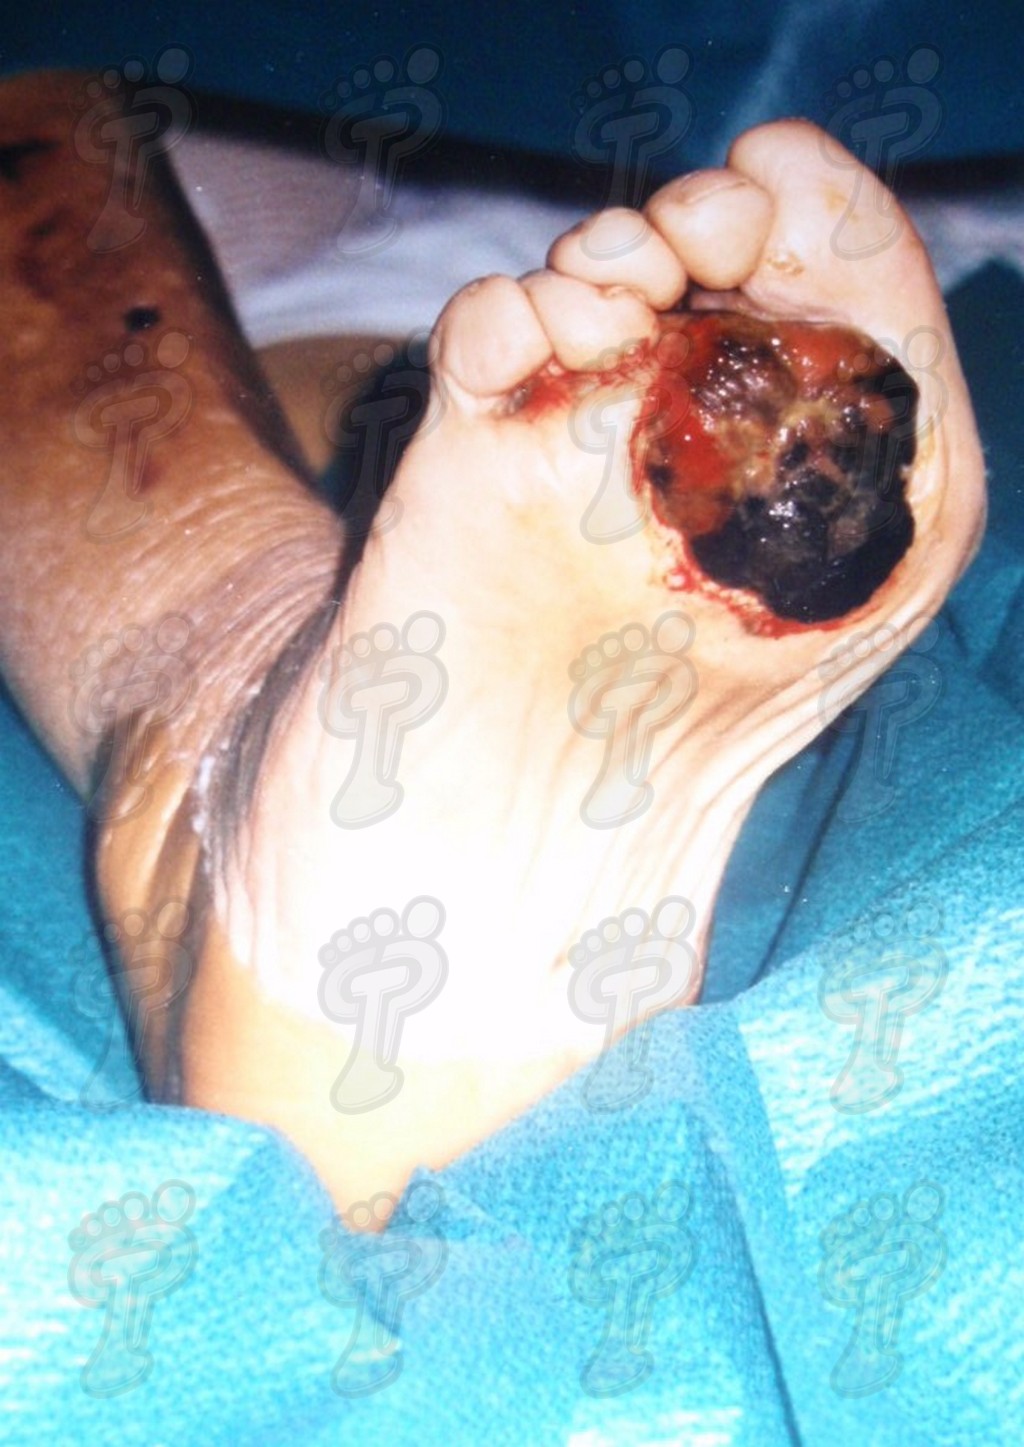 Malignant tumors in foot